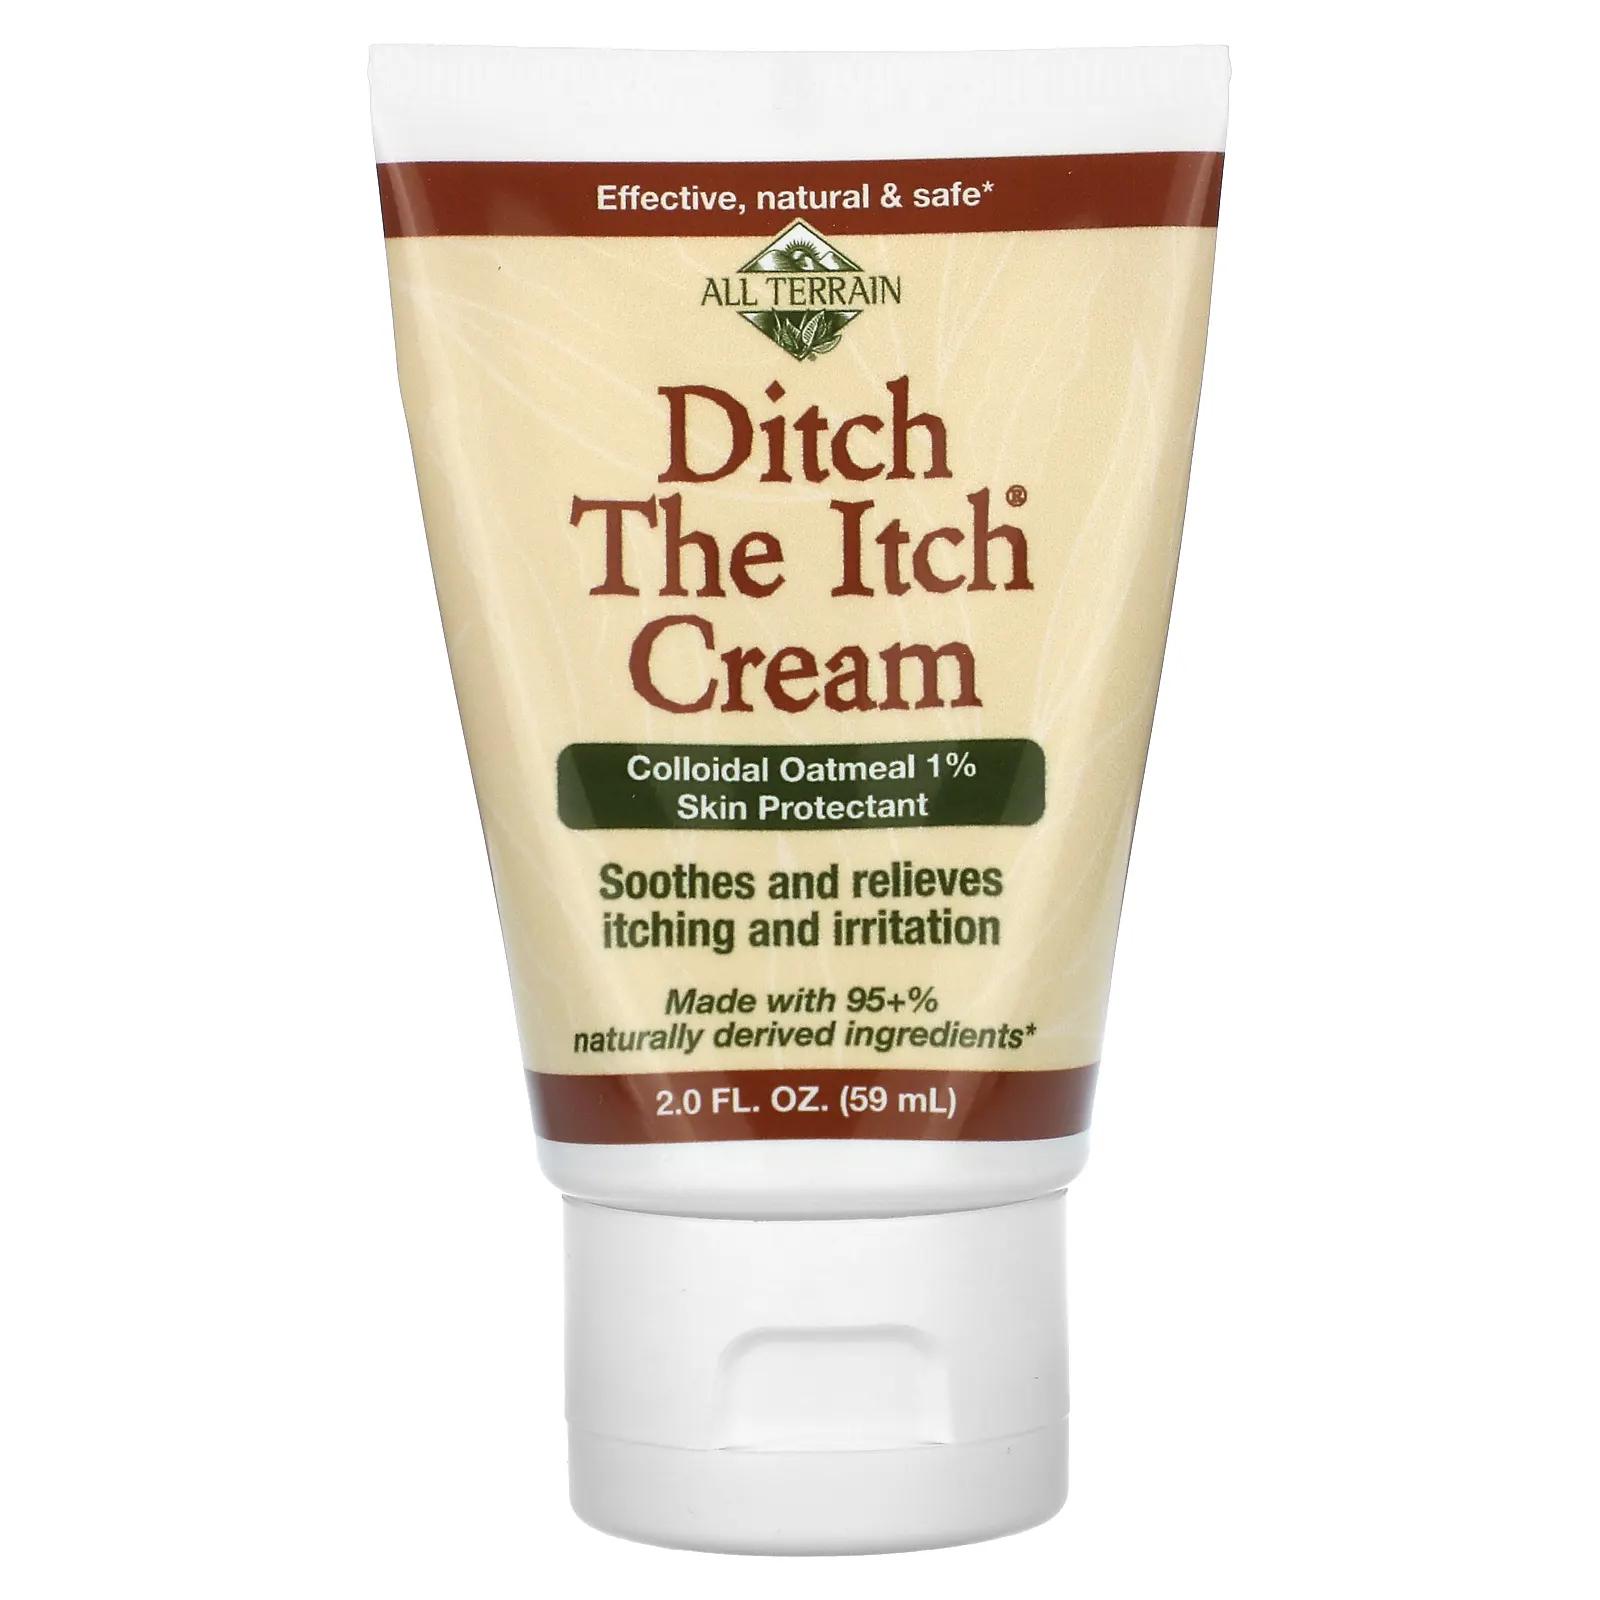 All Terrain Ditch The Itch Cream крем для защиты кожи с коллоидной овсянкой 1% 59 мл (2 жидк. унции) all terrain тканевый бинт без латекса в ассортименте 30 единиц